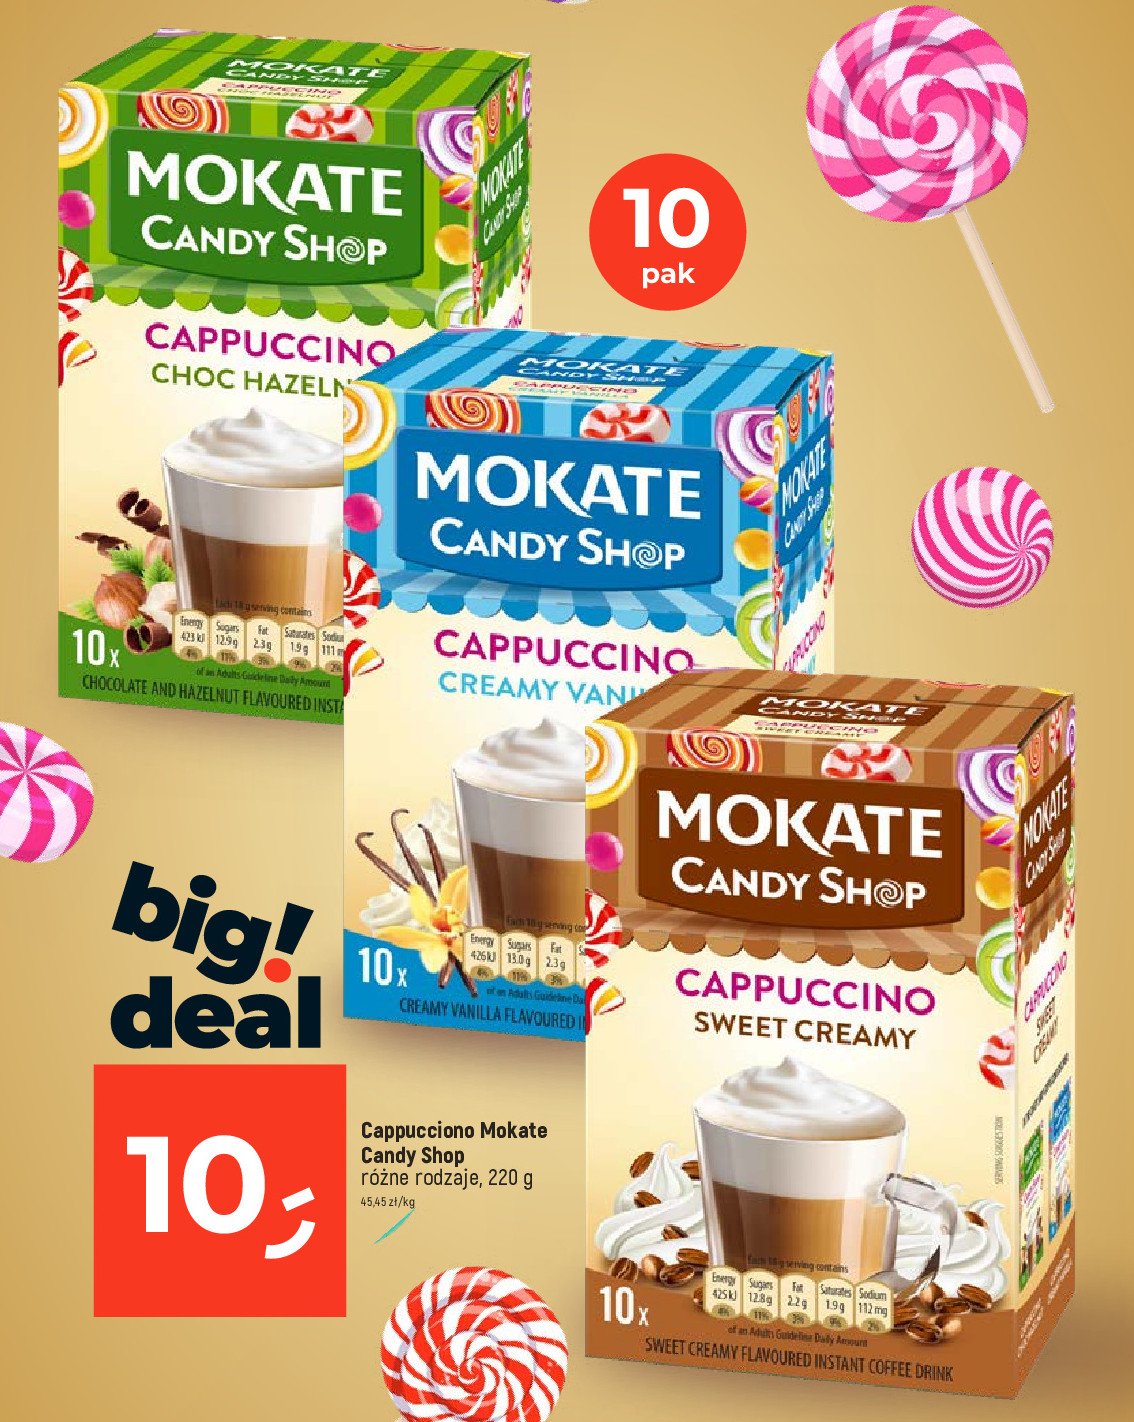 Cappuccino sweet creamy Mokate cappuccino candy shop promocja